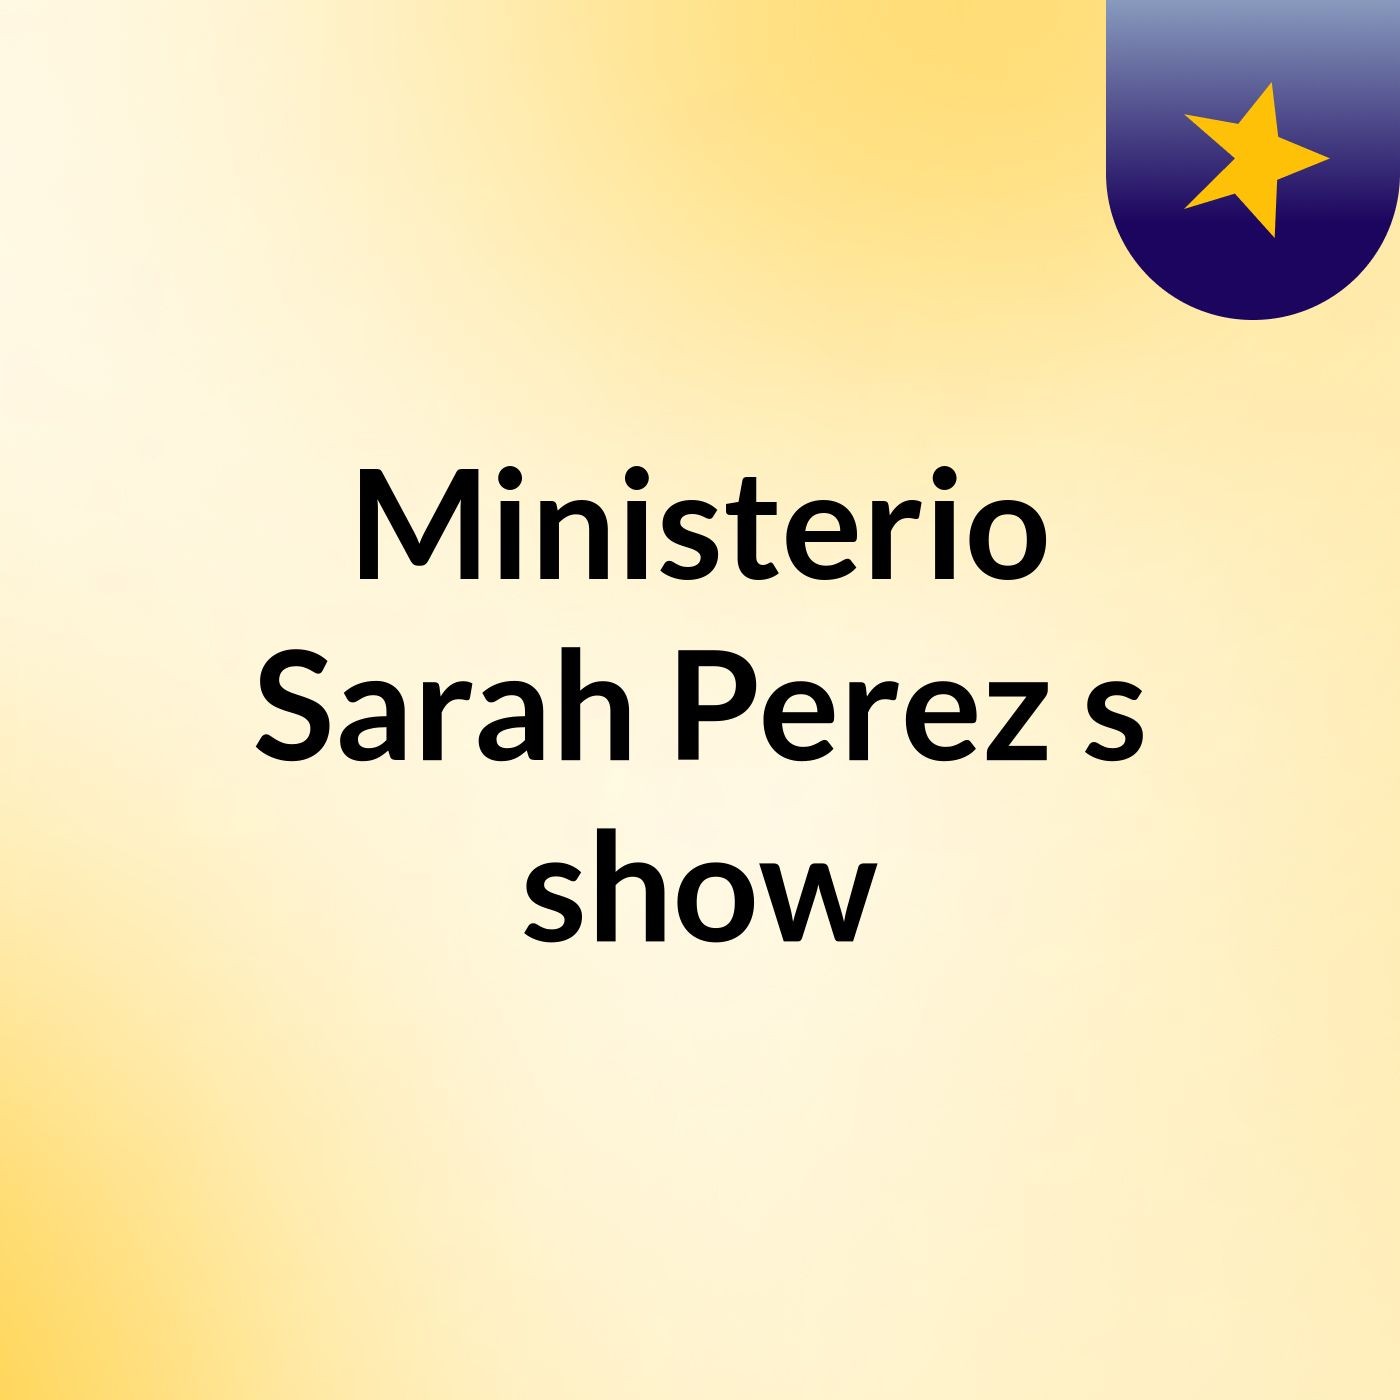 Ministerio Sarah Perez's show